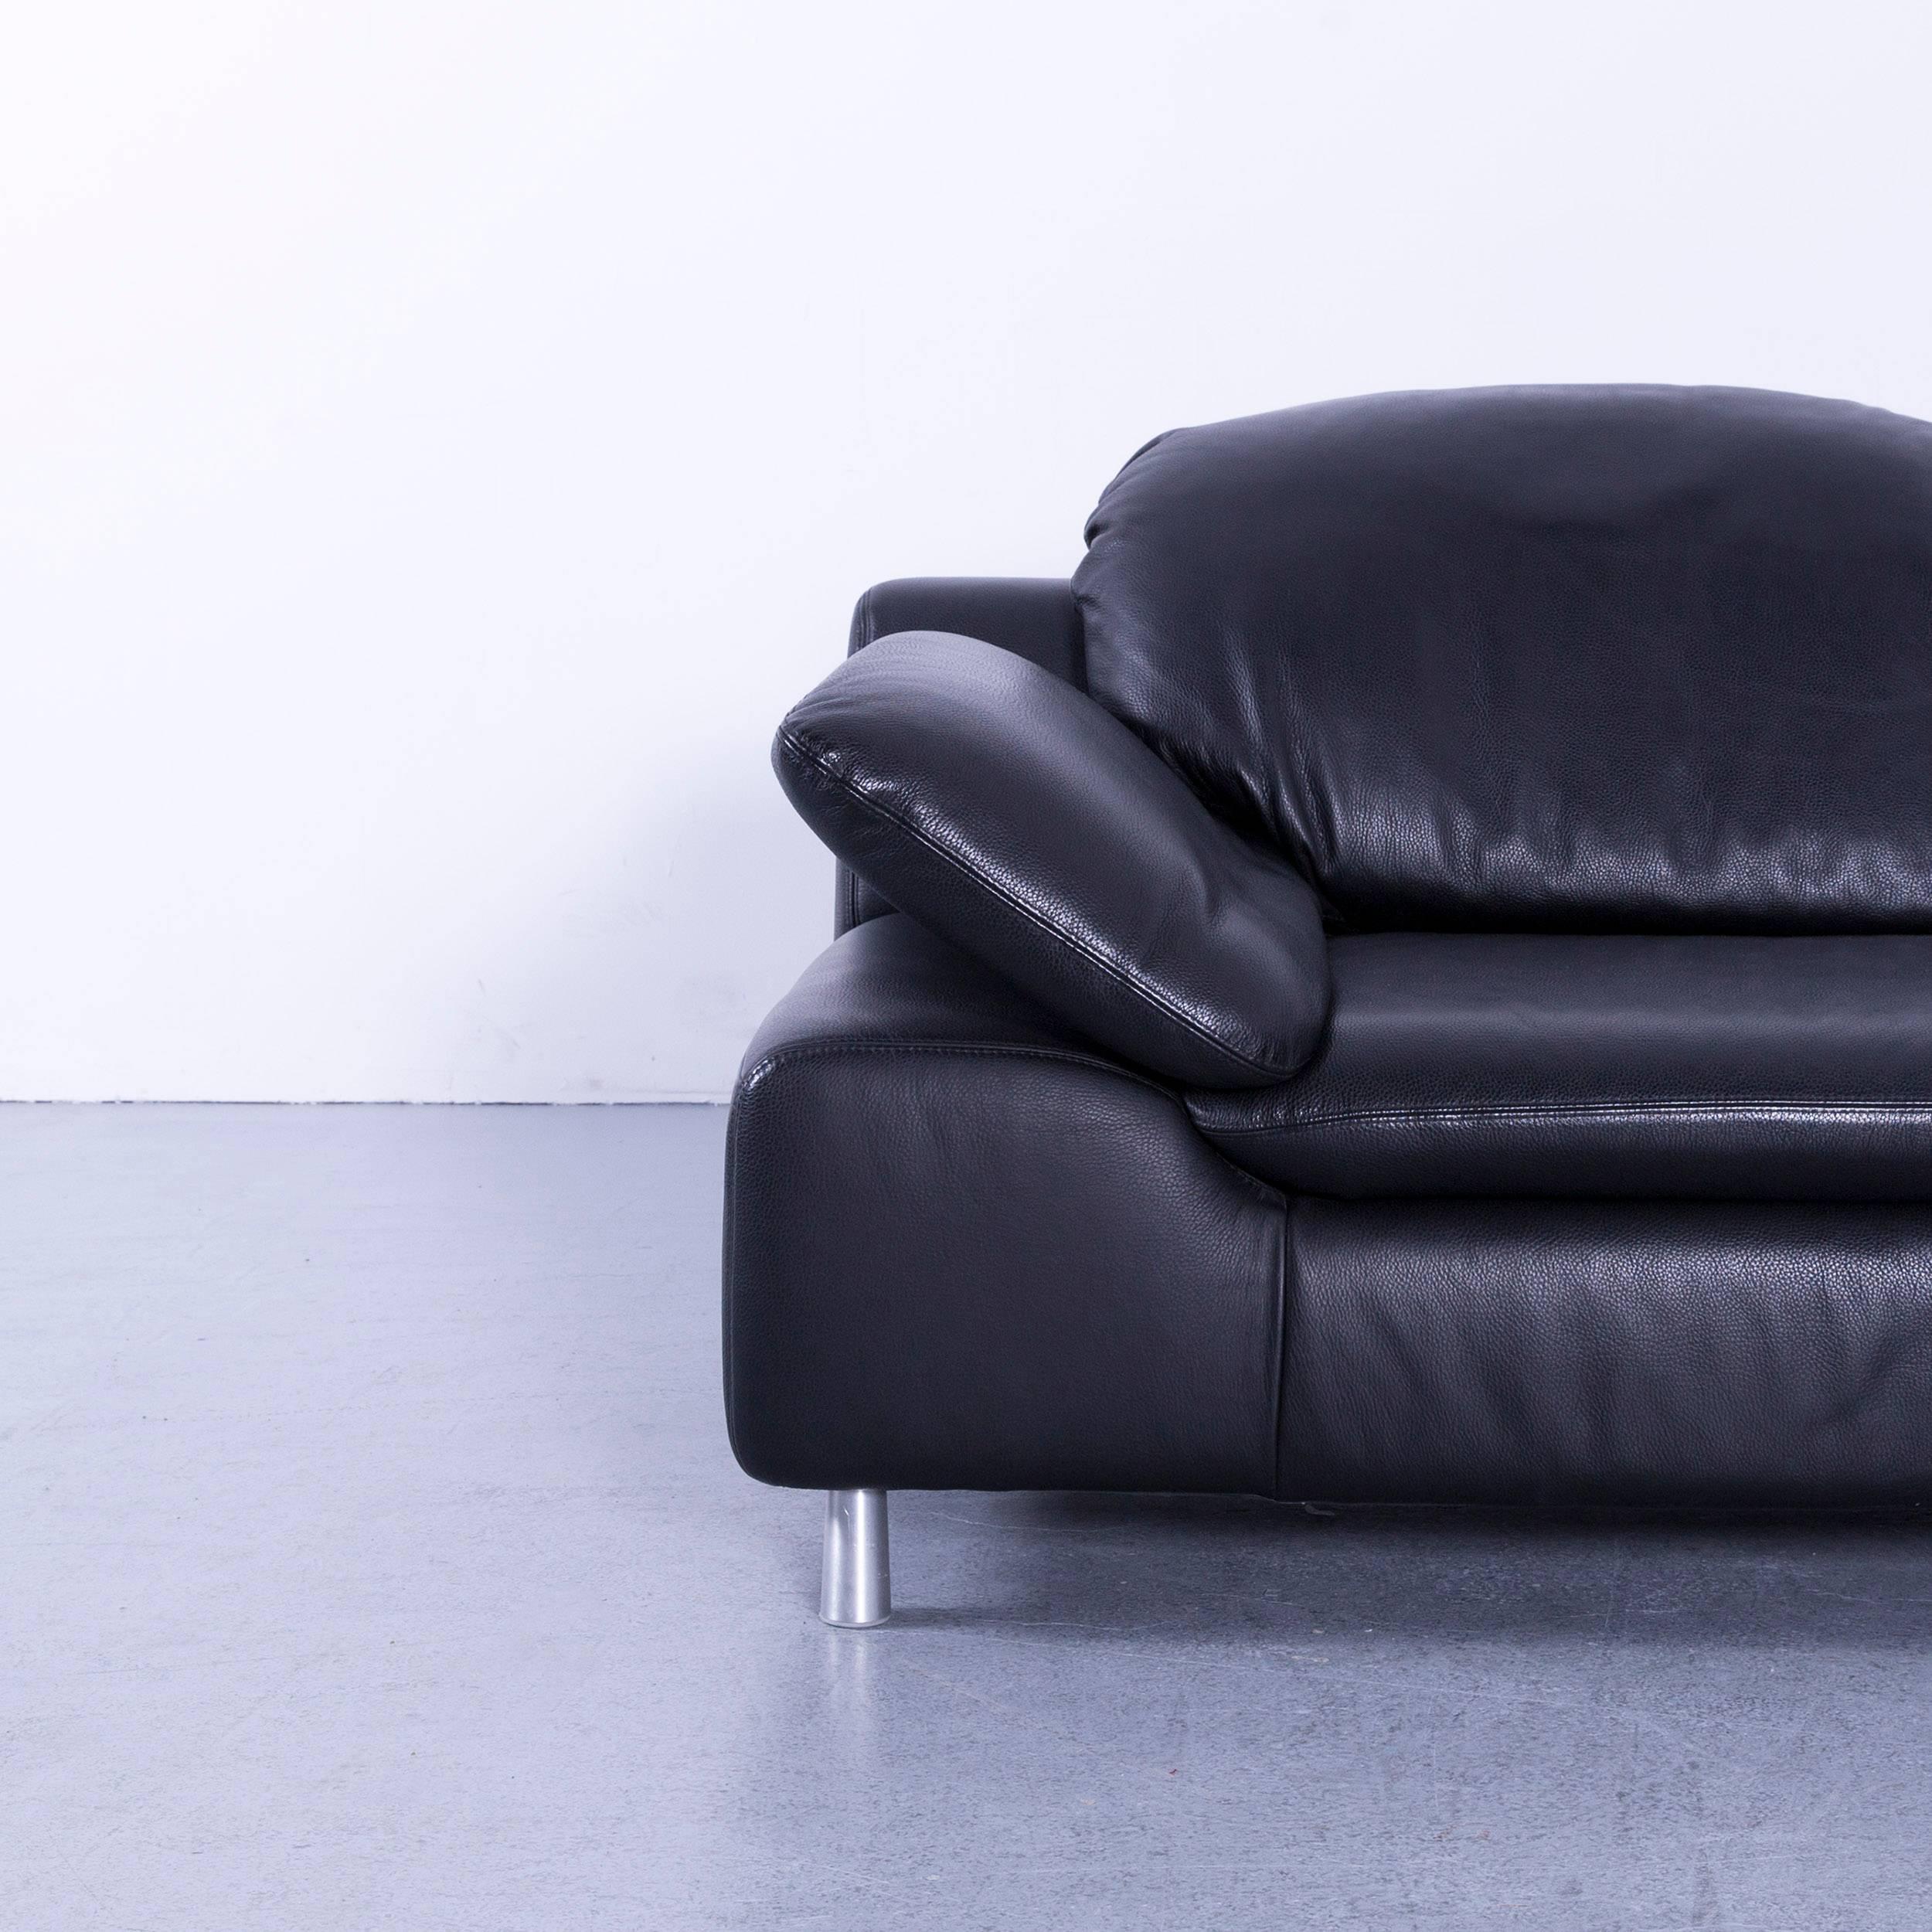 Willi Schillig designer leather corner sofa black full leather with functions.